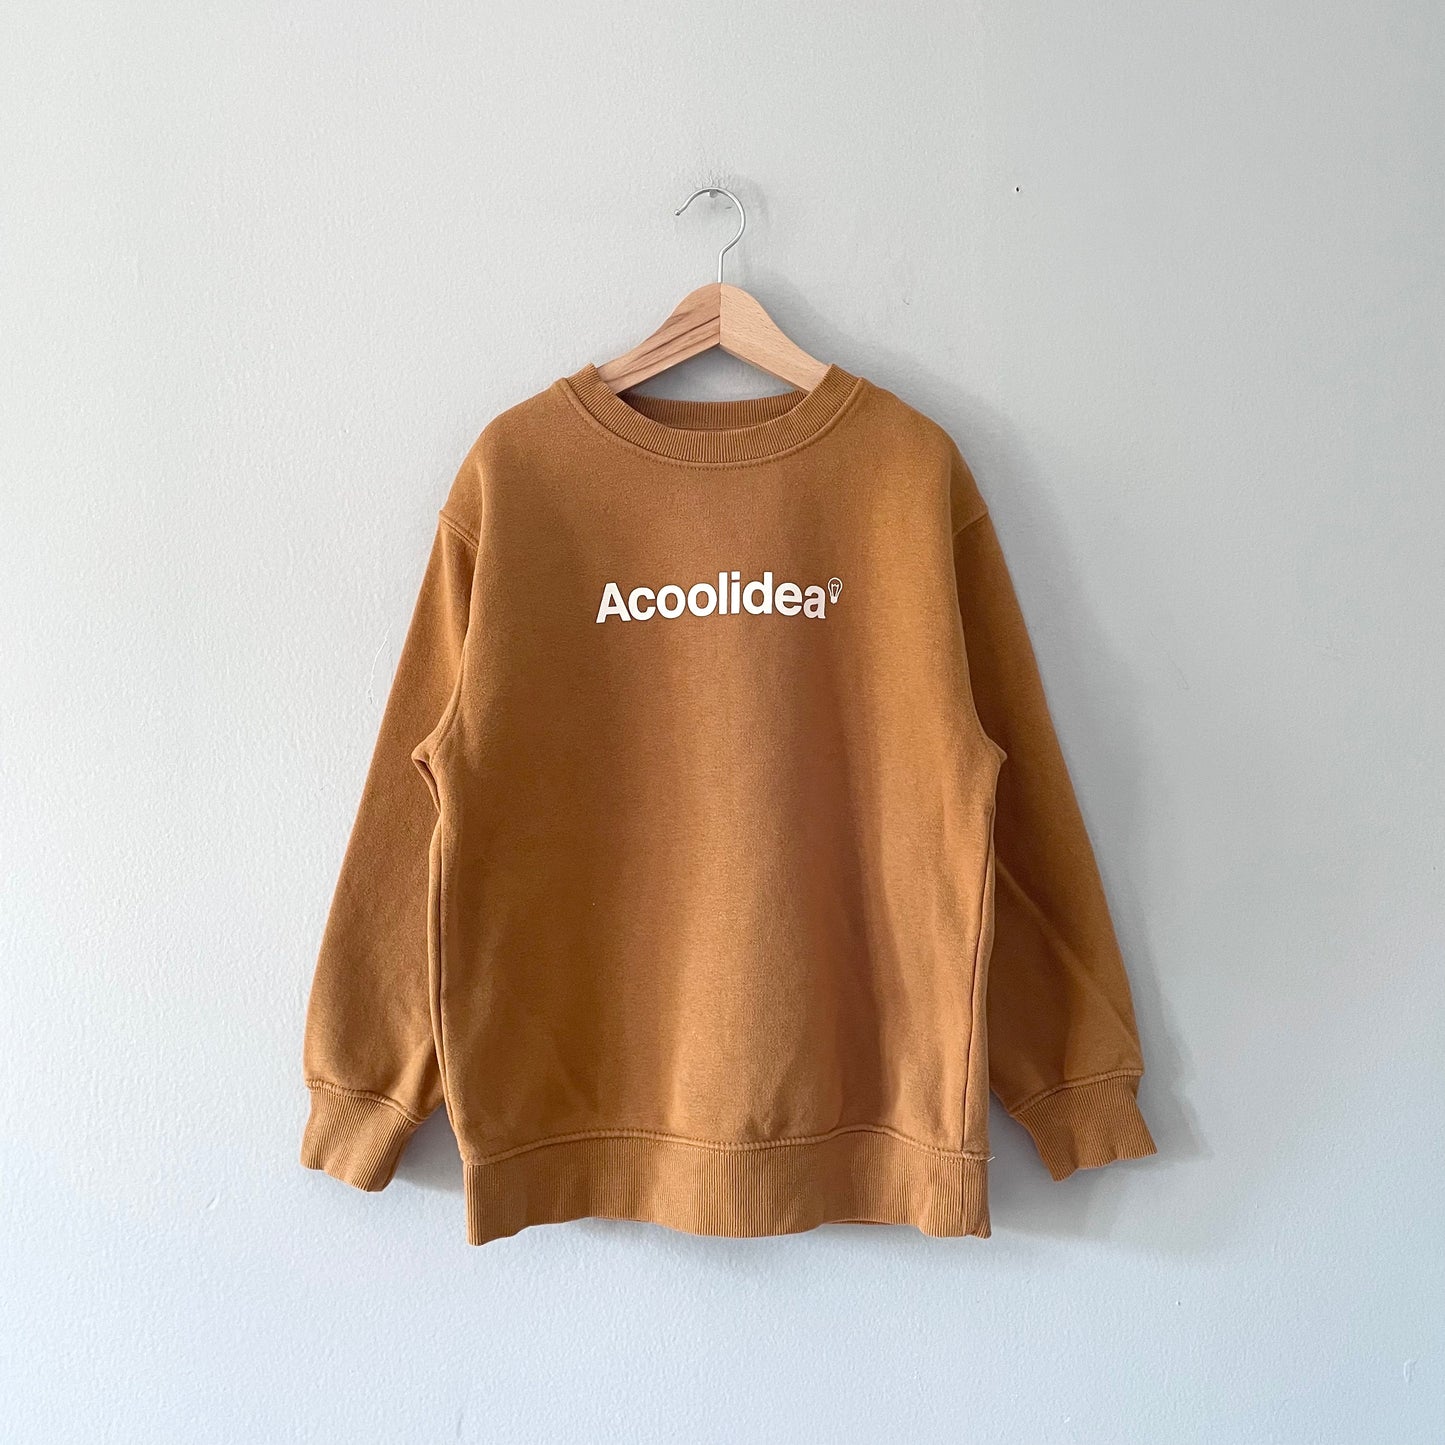 Zara / A cool idea sweatshirt / 8Y